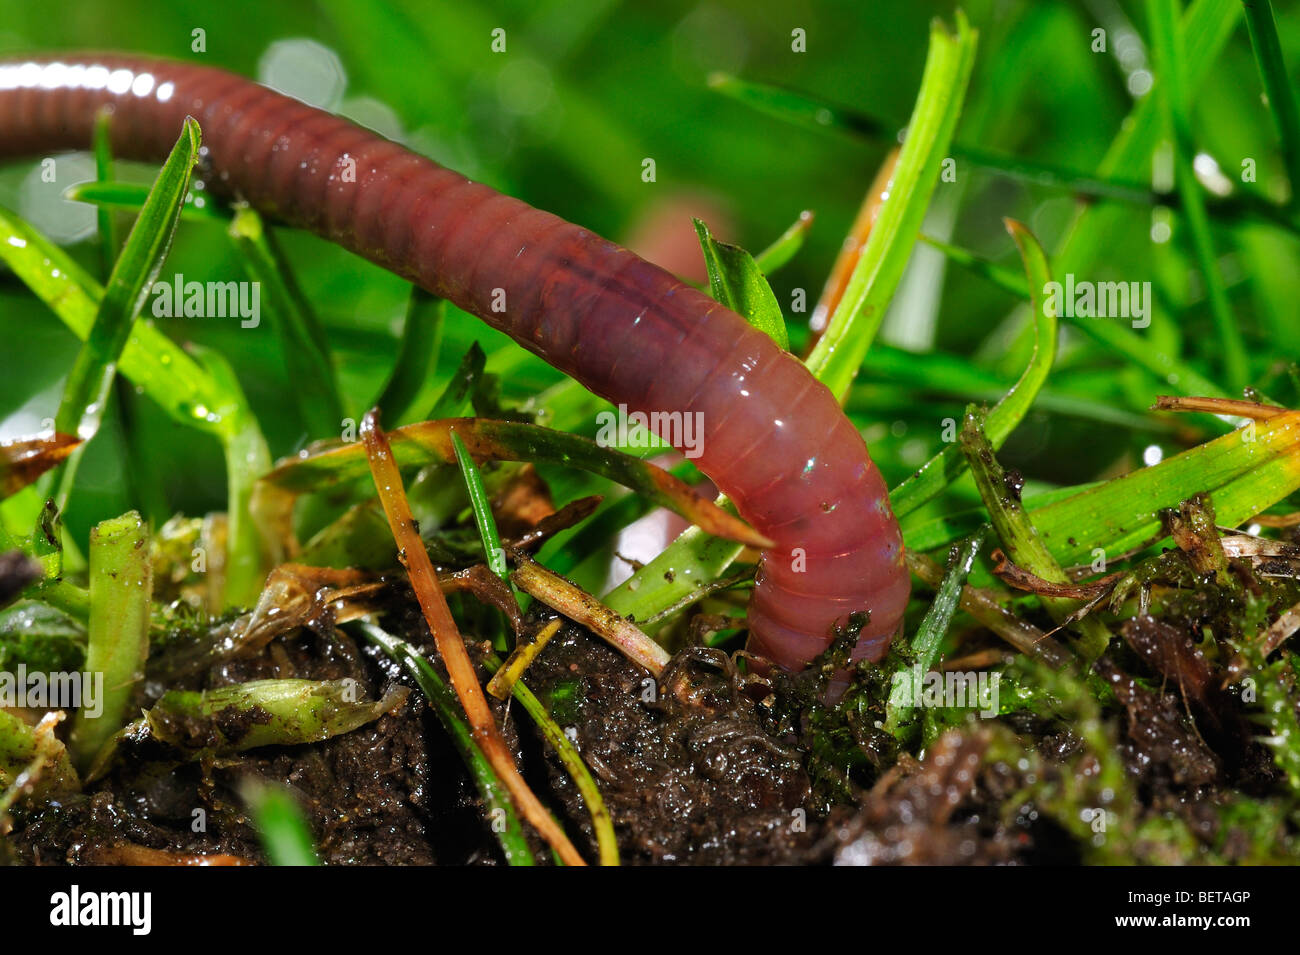 Common earthworm / lob worm (Lumbricus terrestris) burrowing into the ground in garden Stock Photo